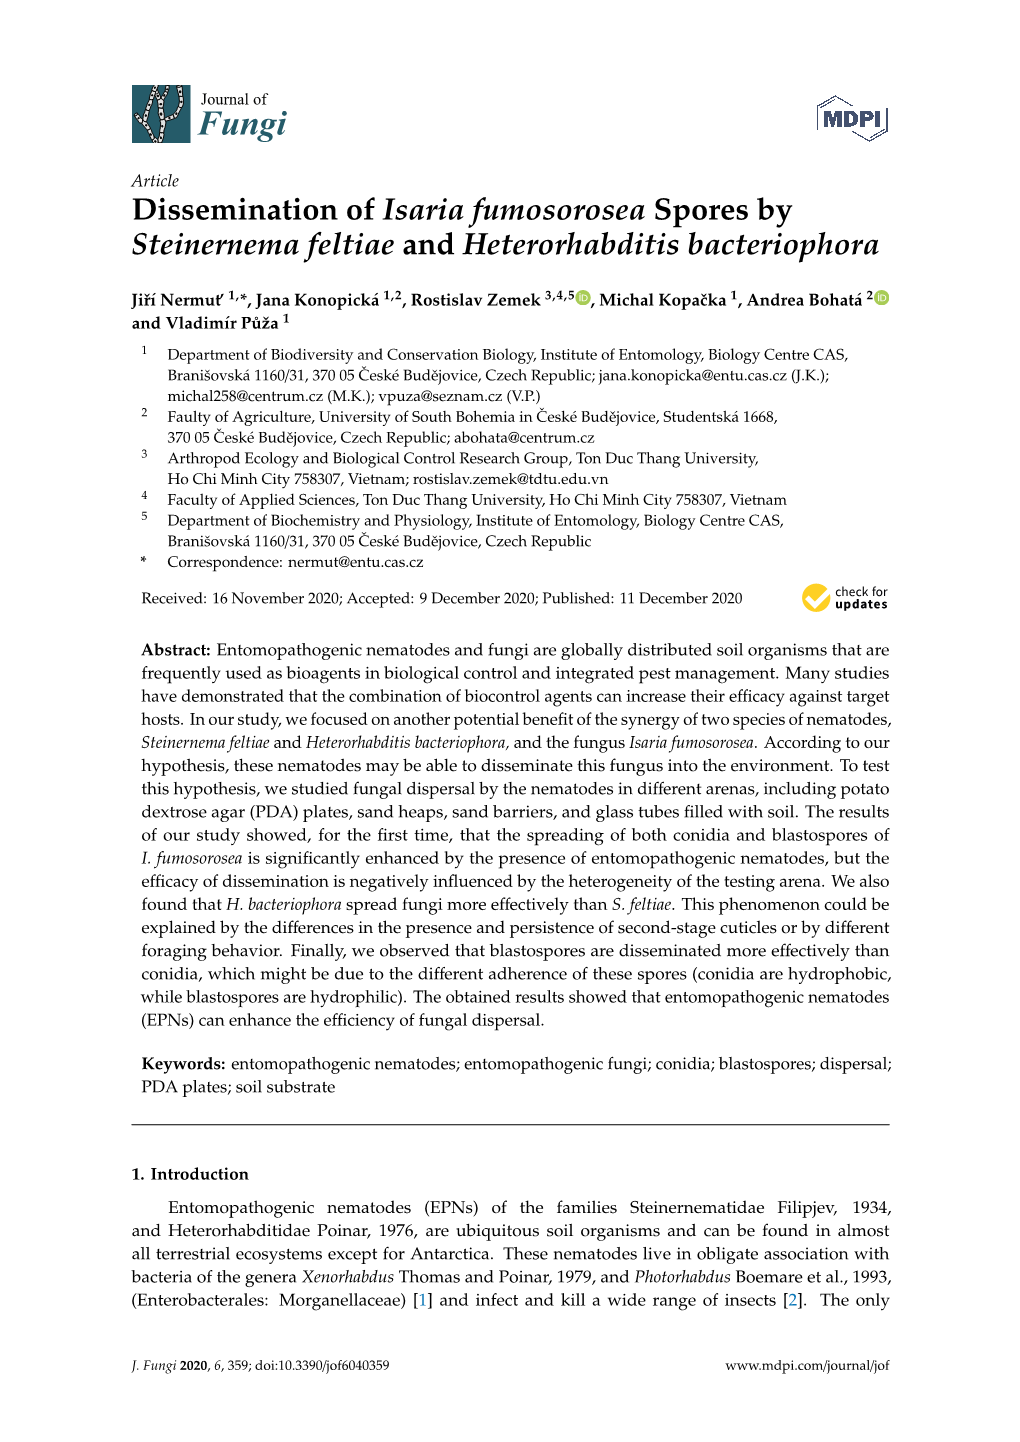 Dissemination of Isaria Fumosorosea Spores by Steinernema Feltiae and Heterorhabditis Bacteriophora